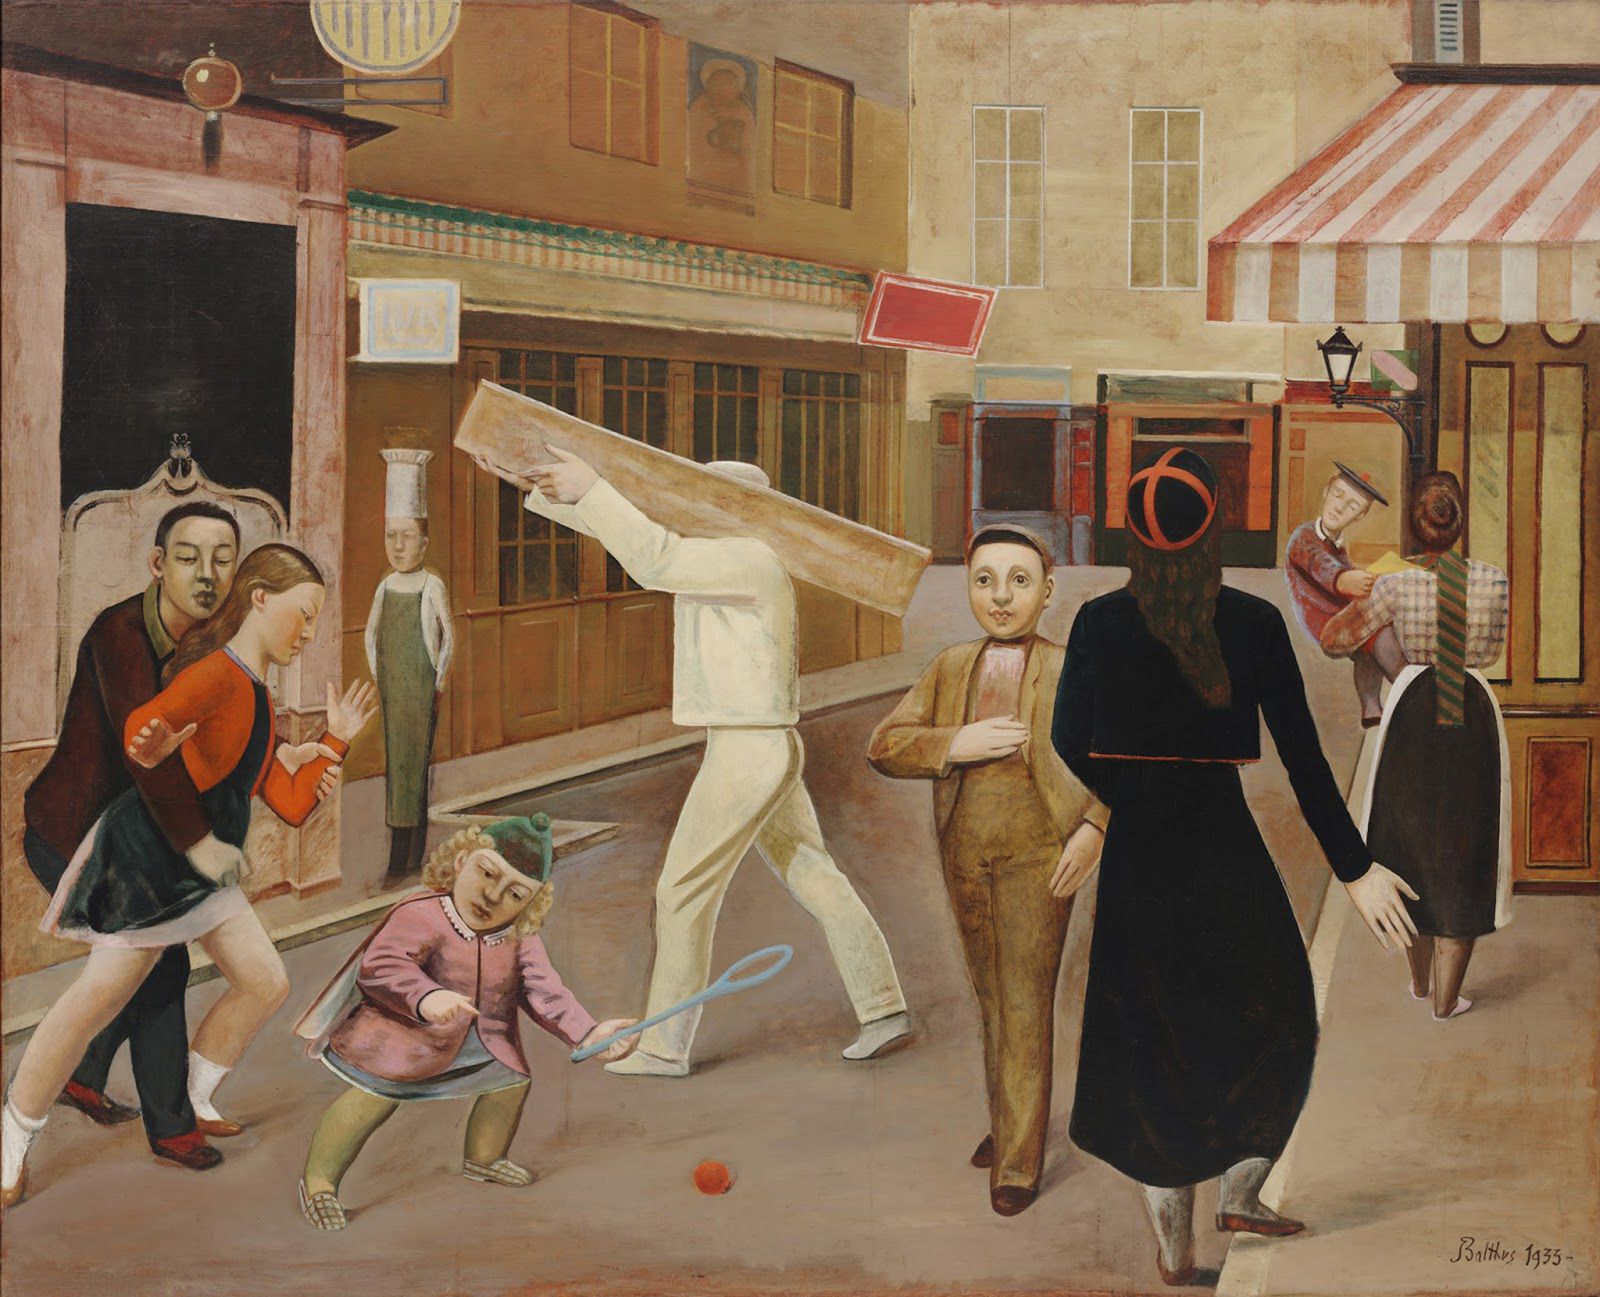 "La rue", 1933 de Balthus - Courtesy MOMA, New York